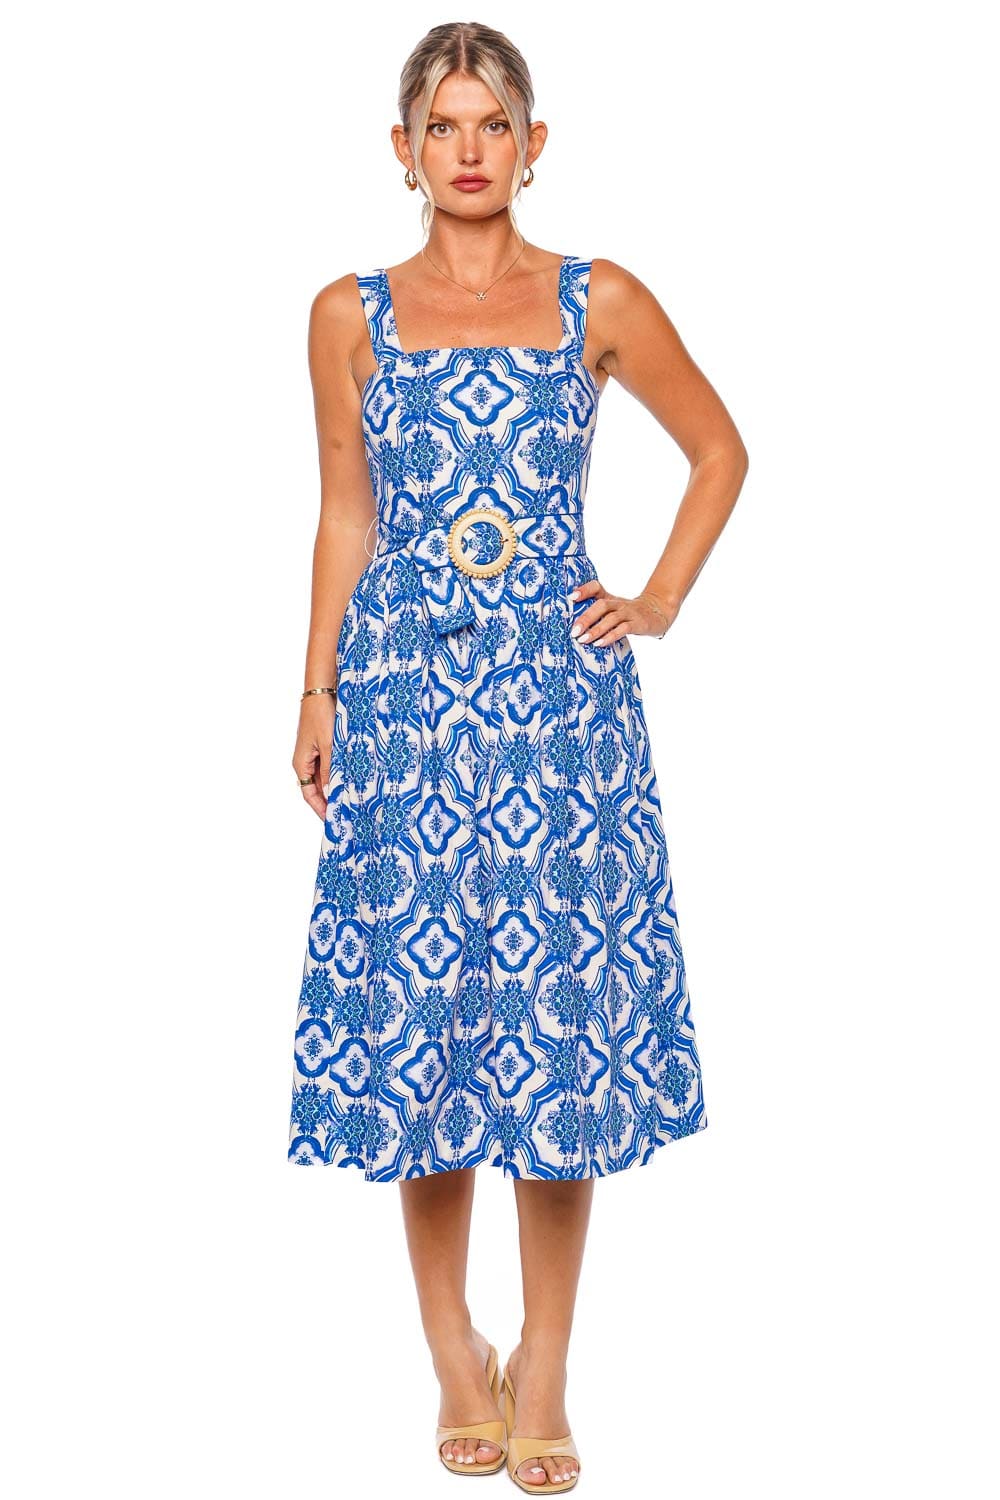 Cara Cara Candace Dress 108 Belle Tile Blue